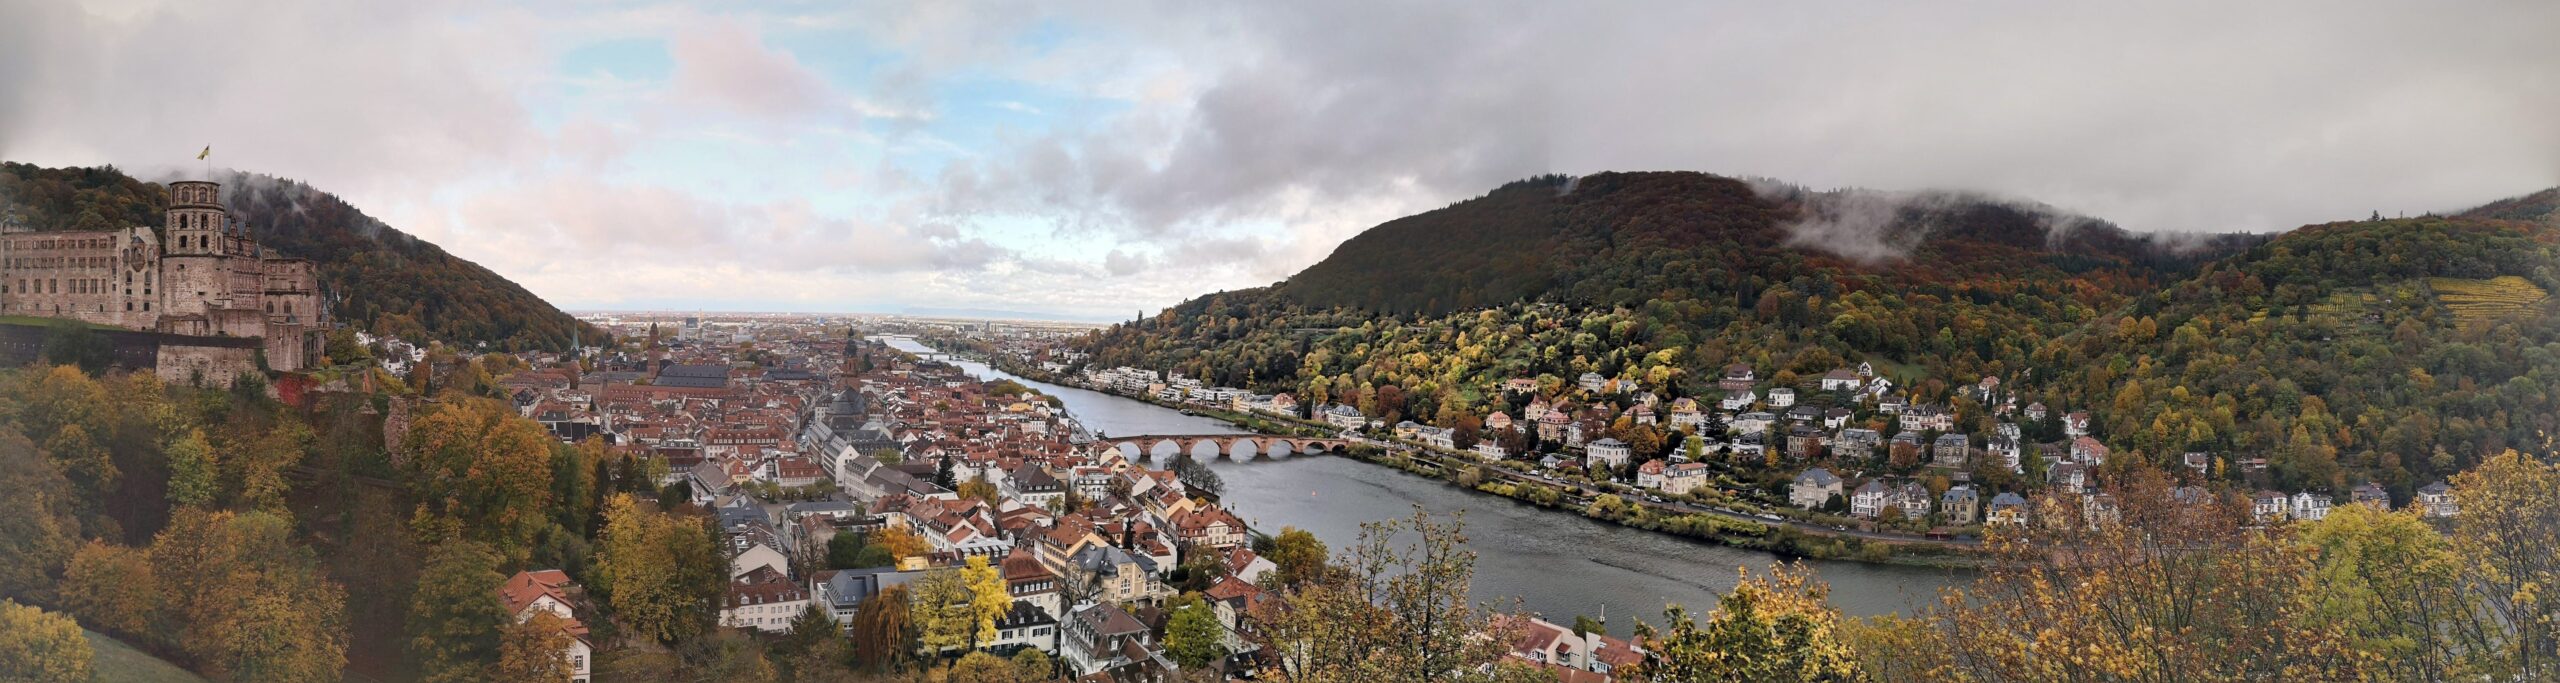 Heidelbergas